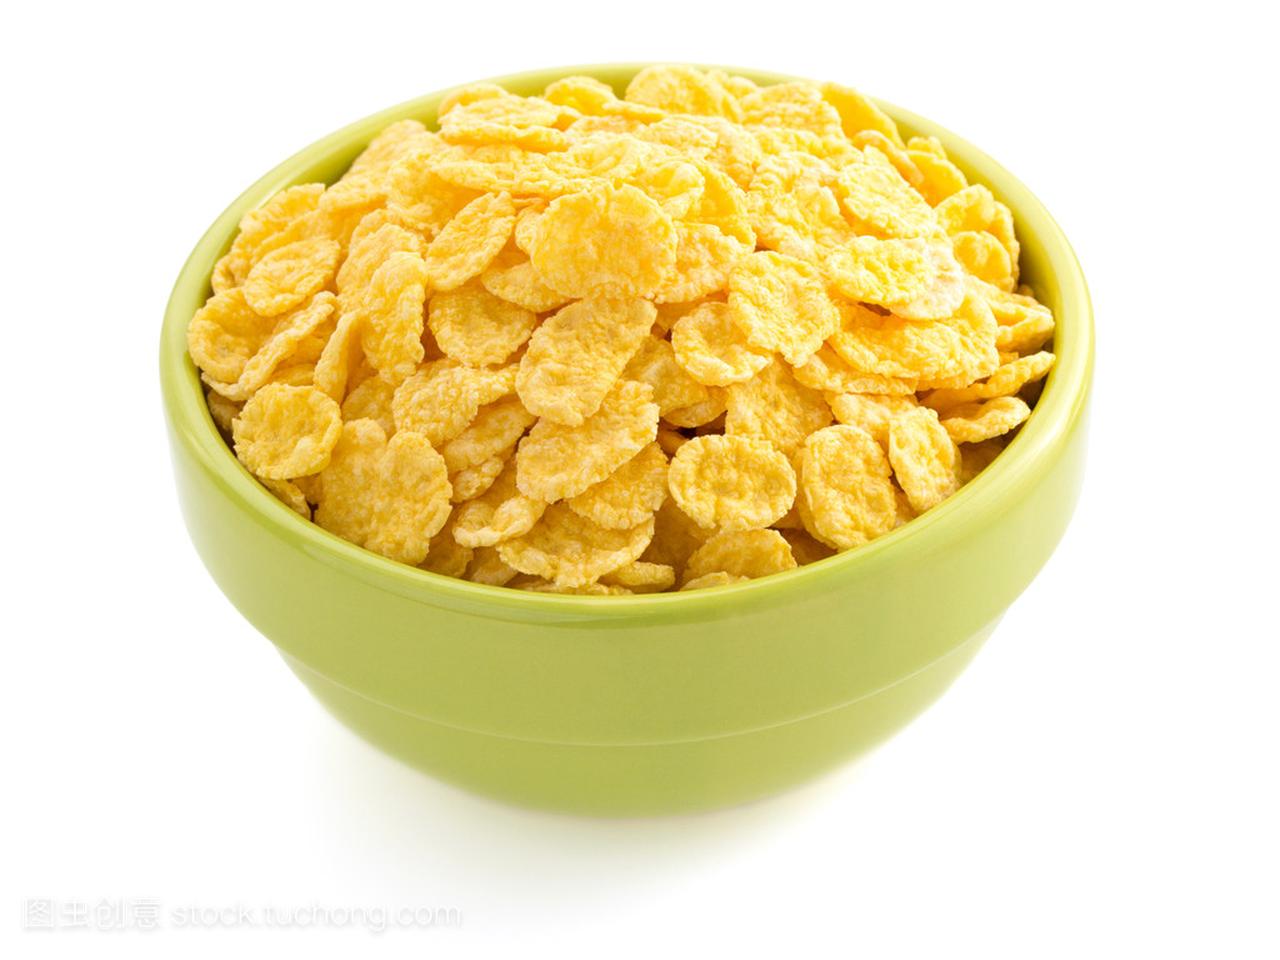 Corn flakes in bowl on white